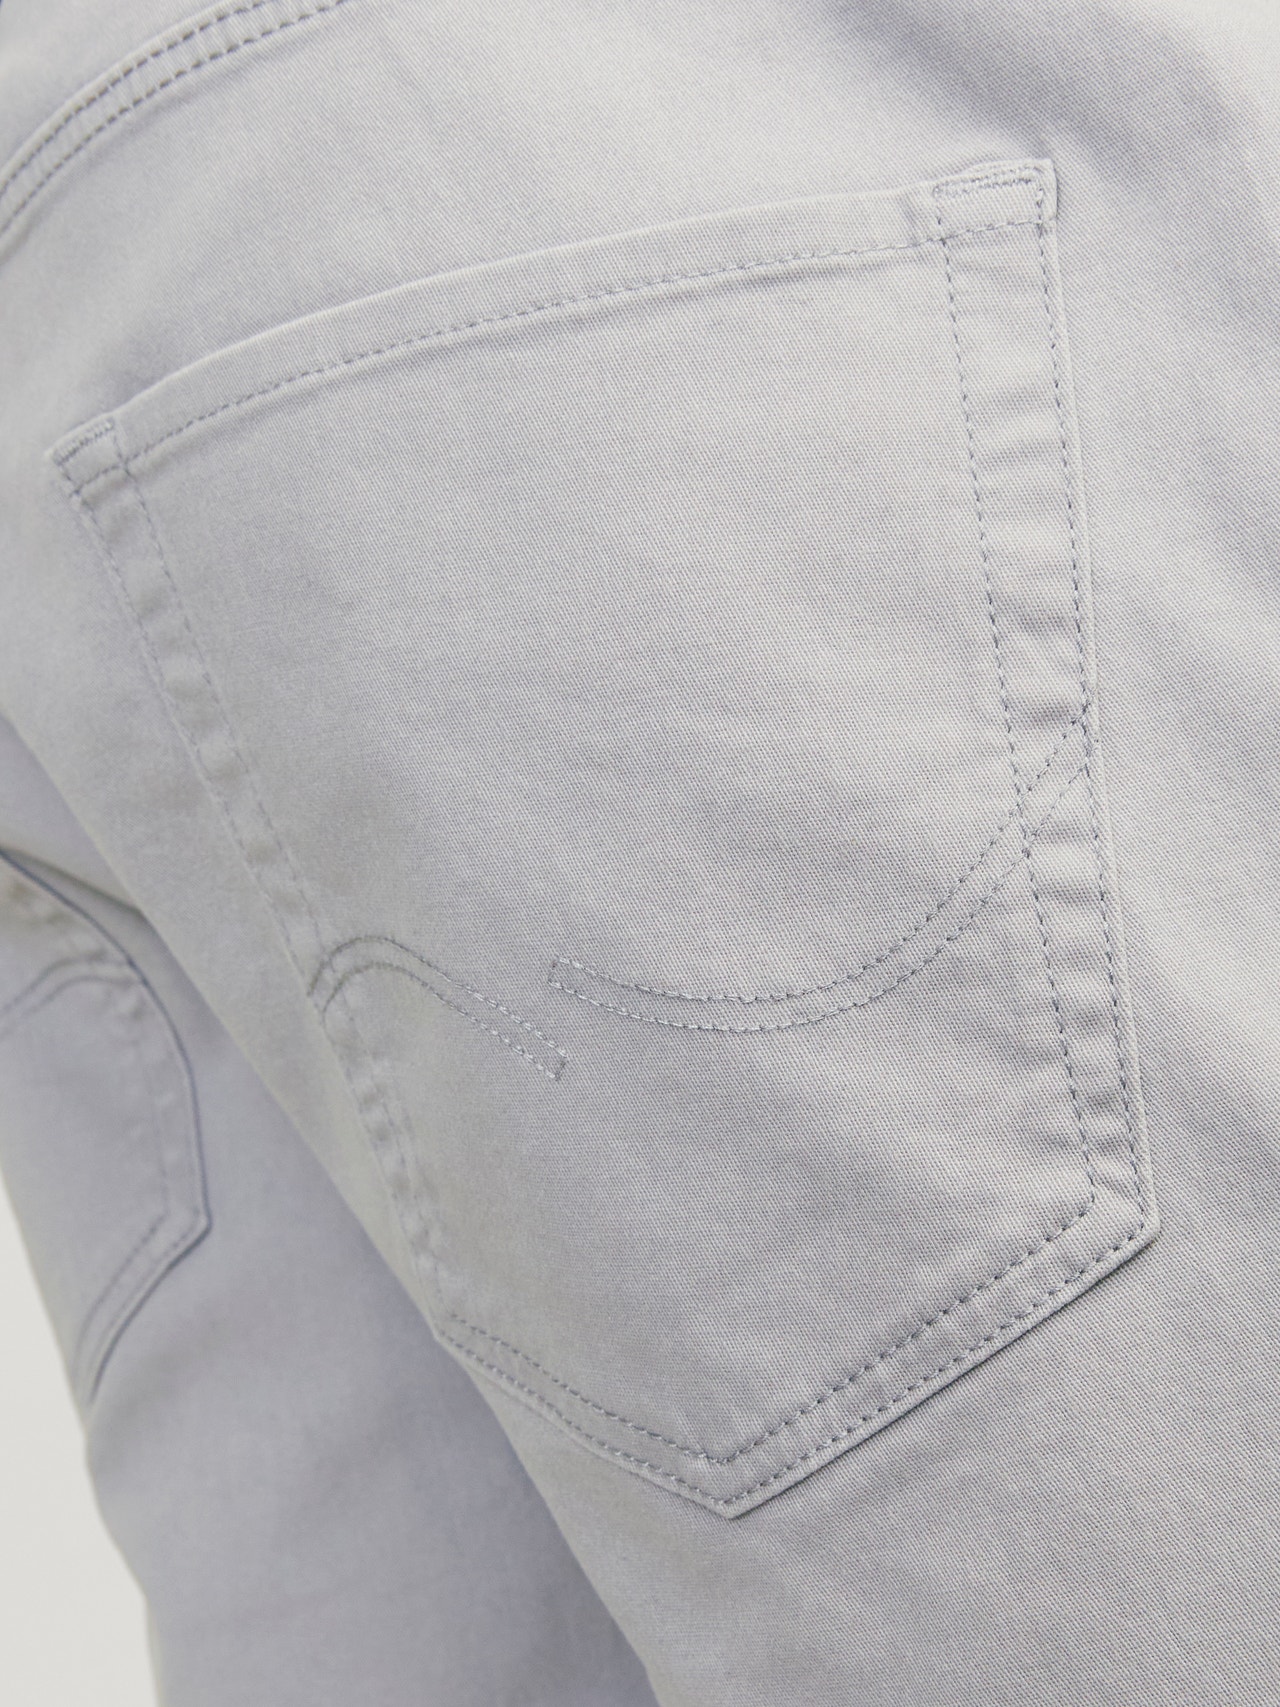 Jack & Jones Regular Fit Jeans Shorts -Ultimate Grey - 12165892